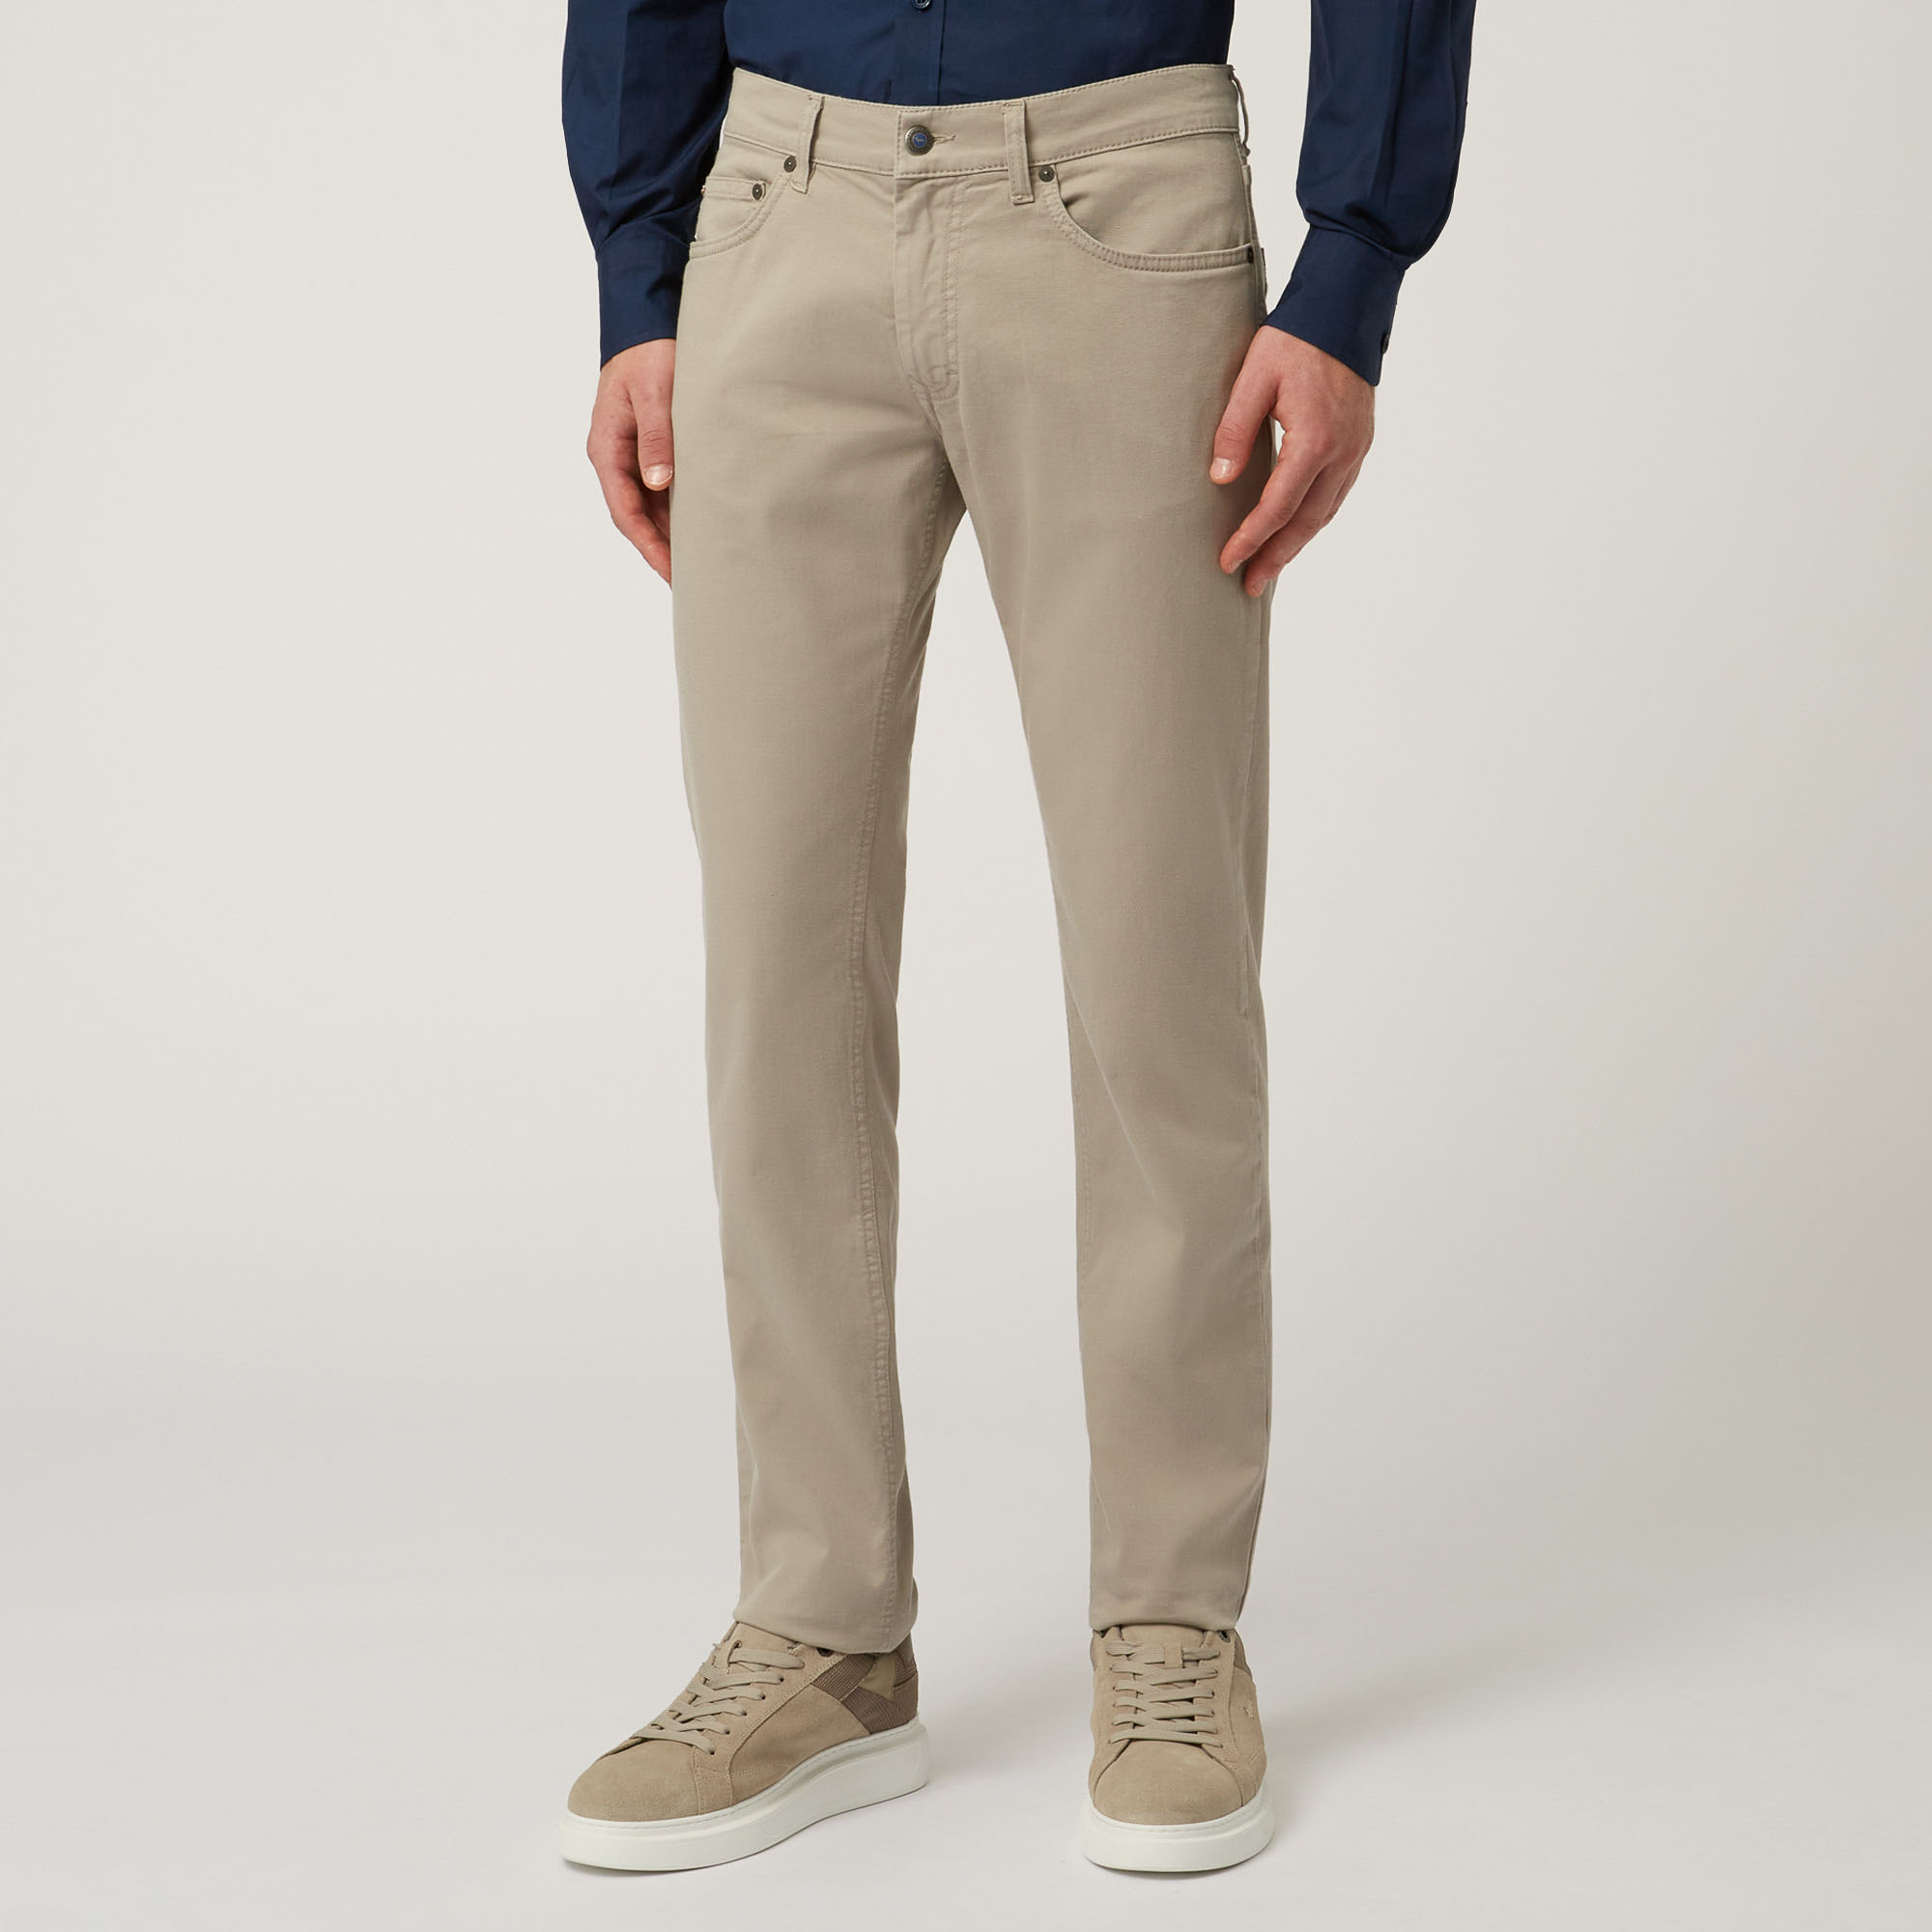 Essentials trousers in plain coloured cotton, Beige, large